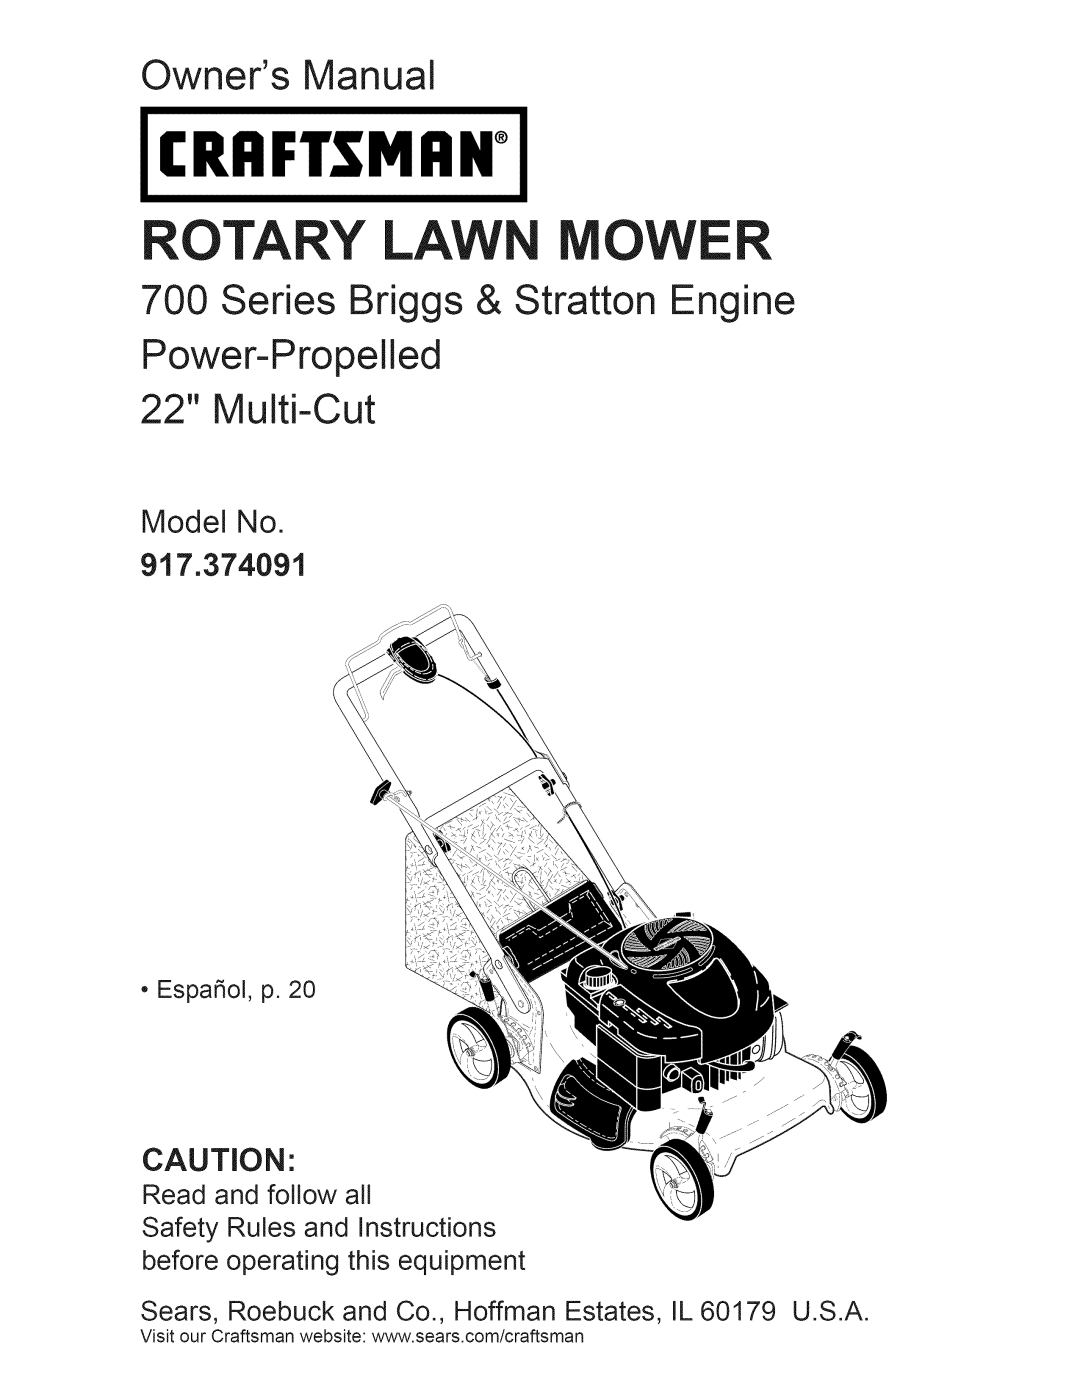 Craftsman owner manual Model No 917.374091, Craftsman, Rotary Lawn Mower, Owners Manual, Power-Propelled 22 Multi-Cut 